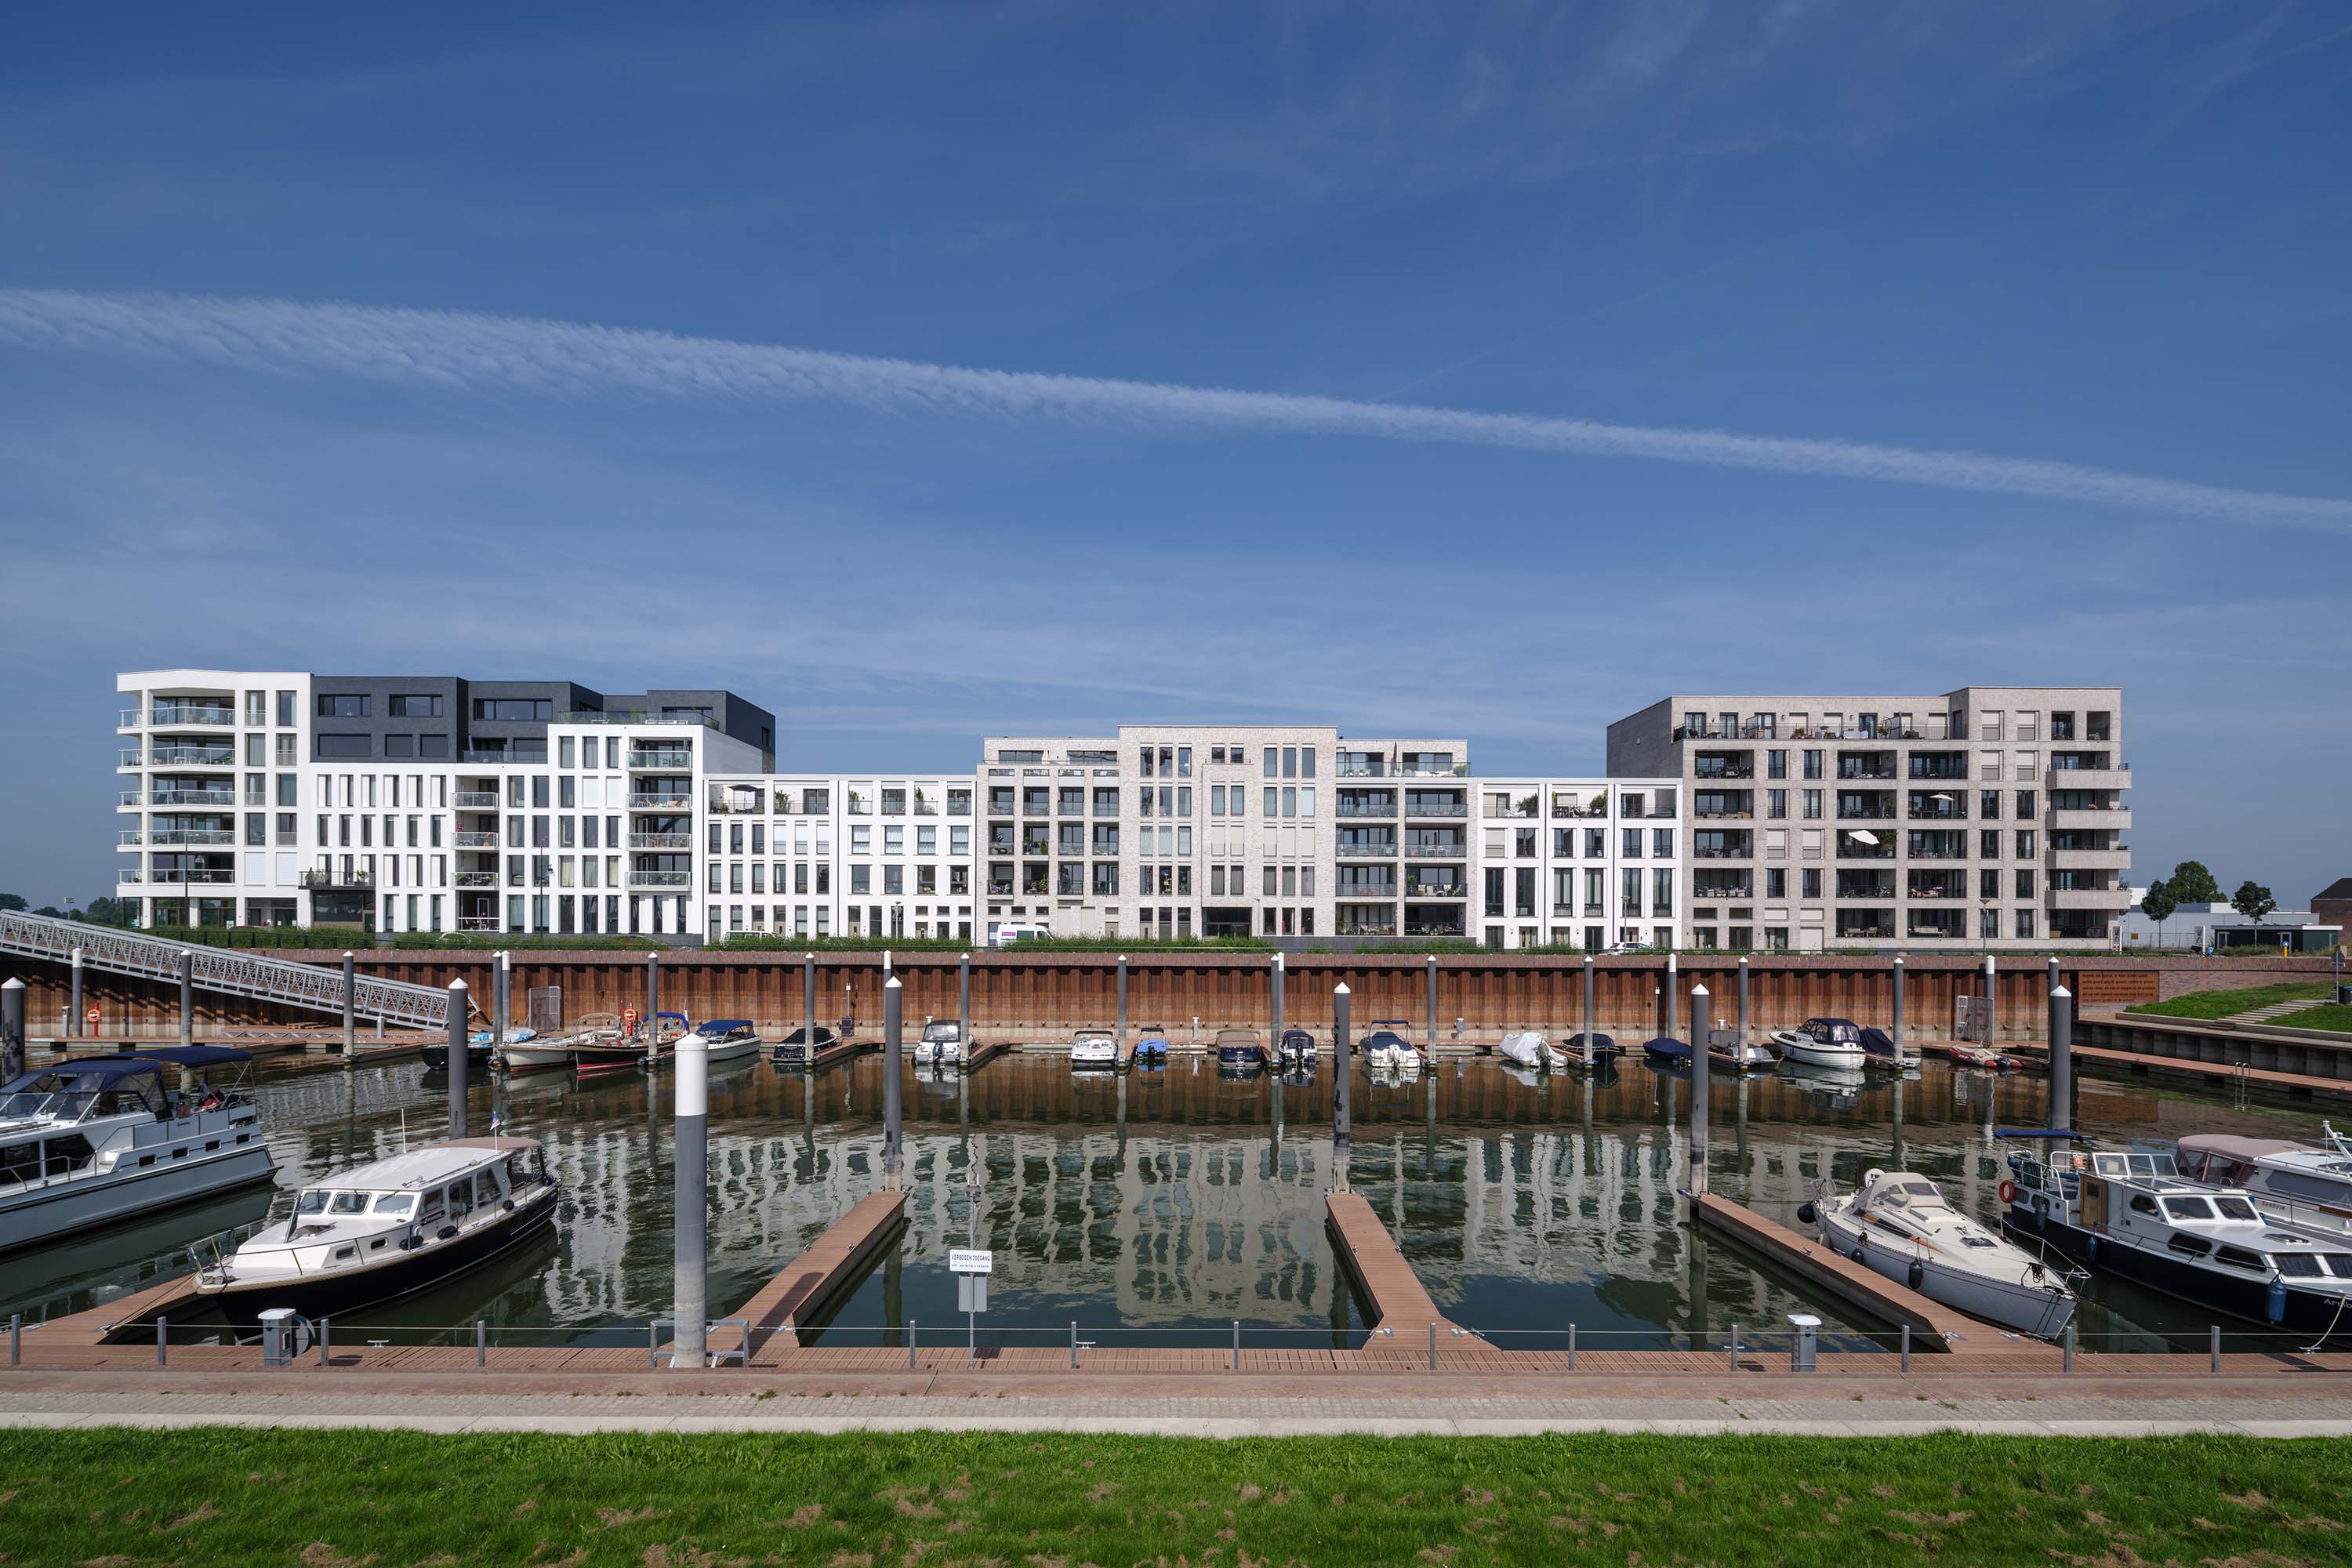 Completion of Kade Noord in Zutphen by KCAP and Zecc Architecten